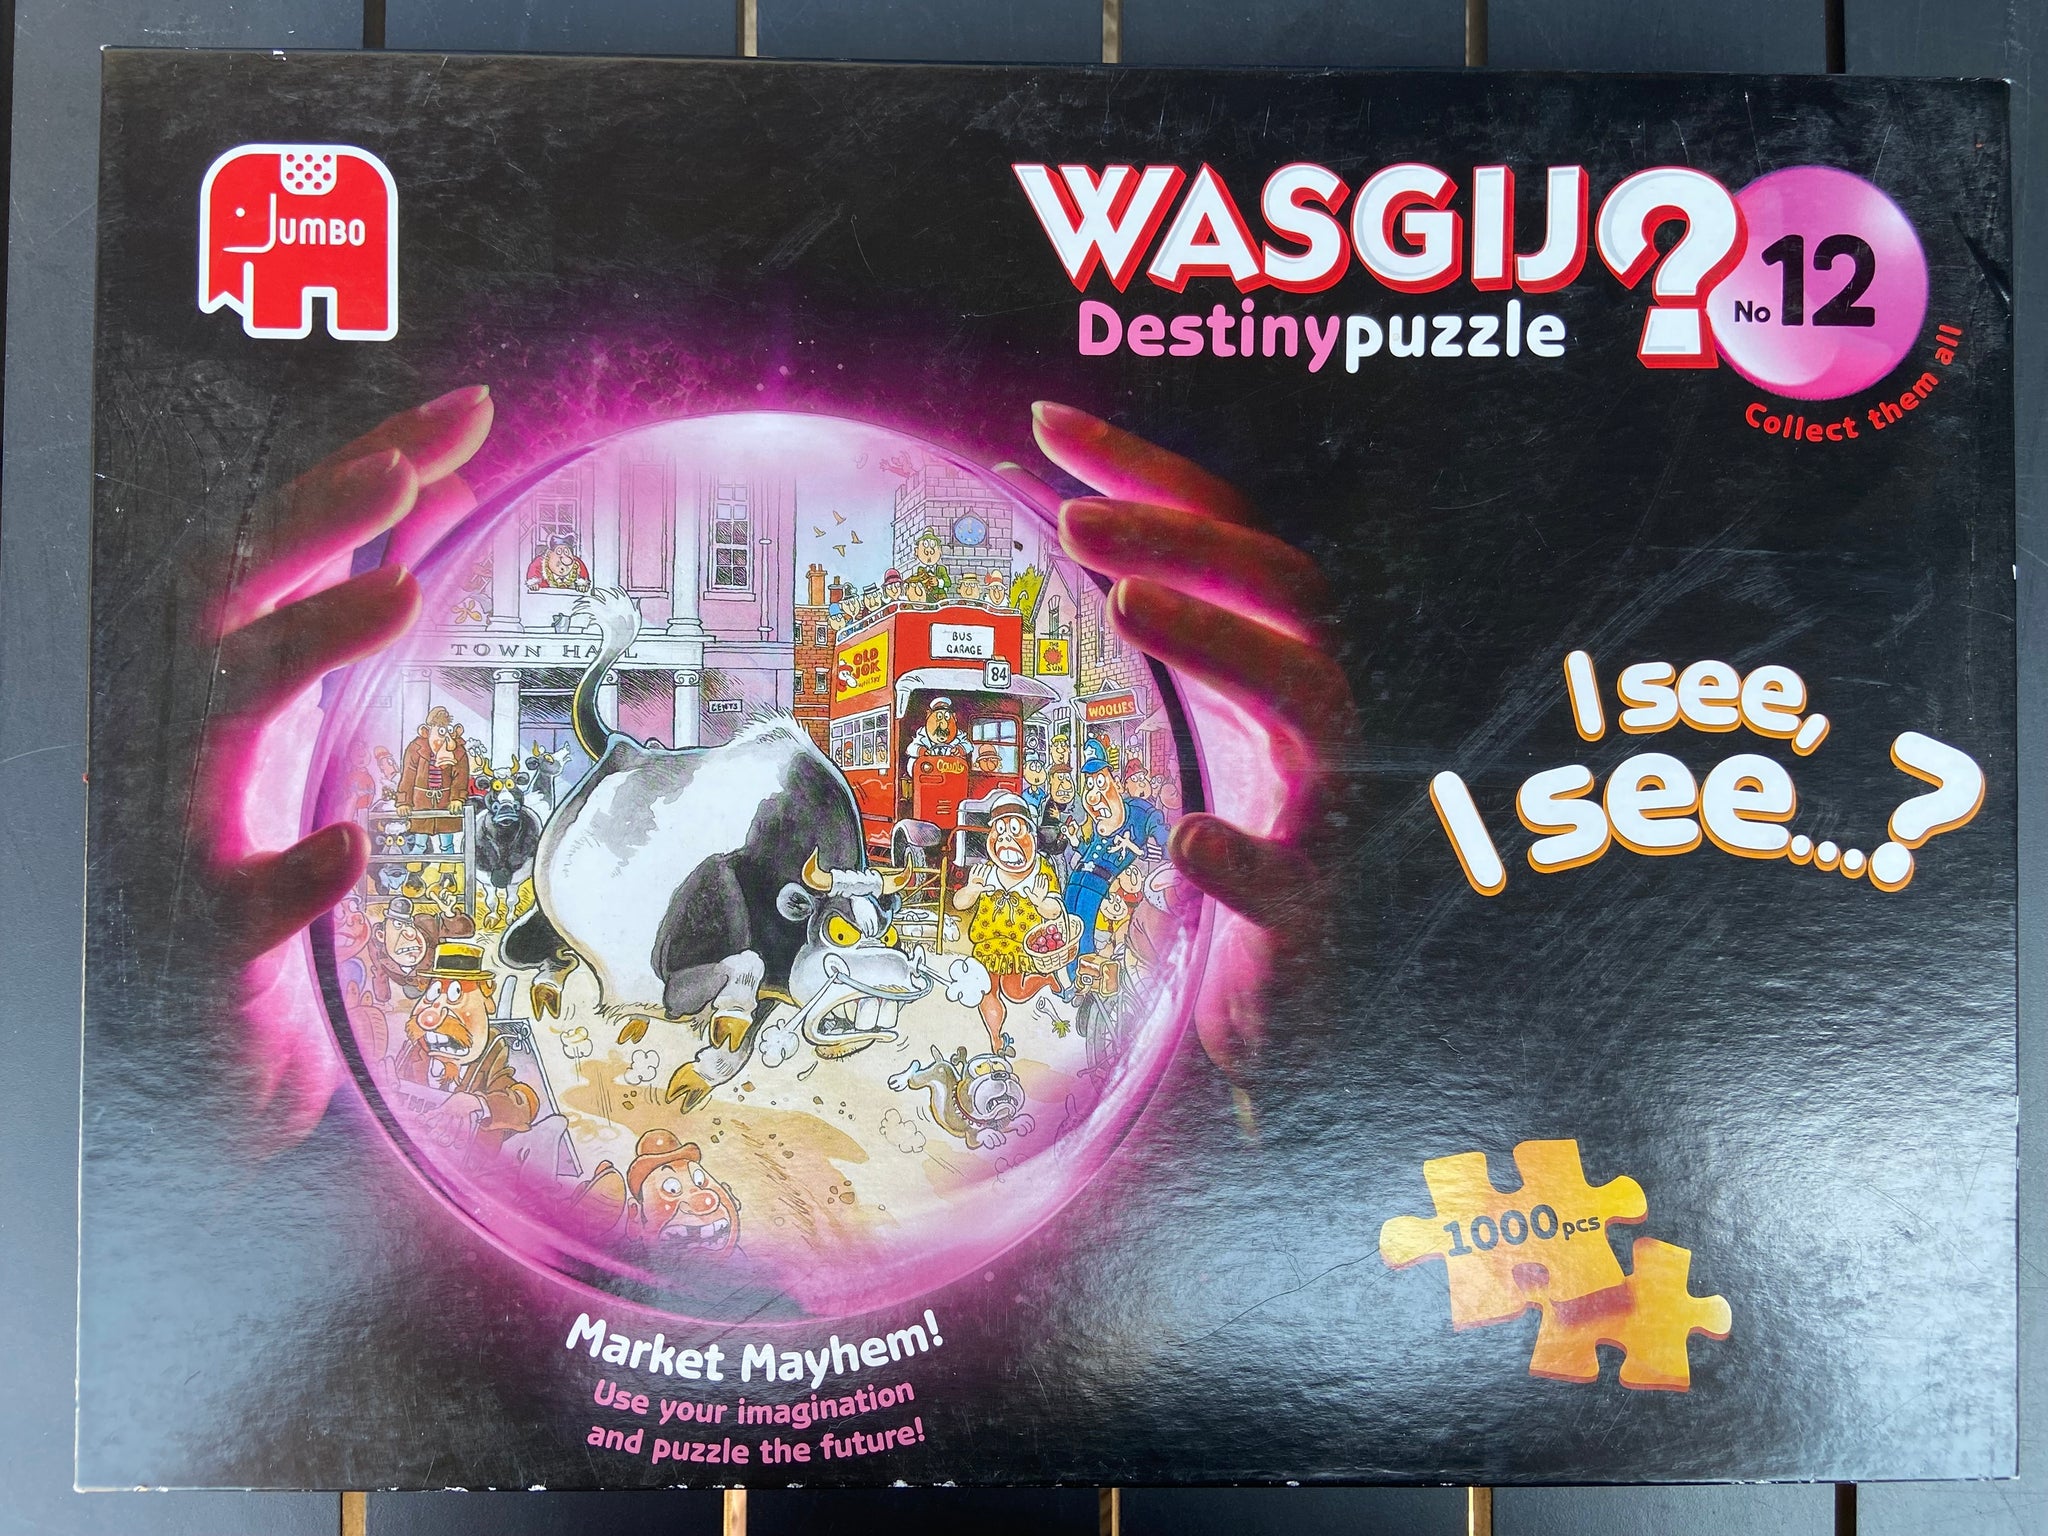 Wasgij 12 Destiny Puzzle - Market Mayhem